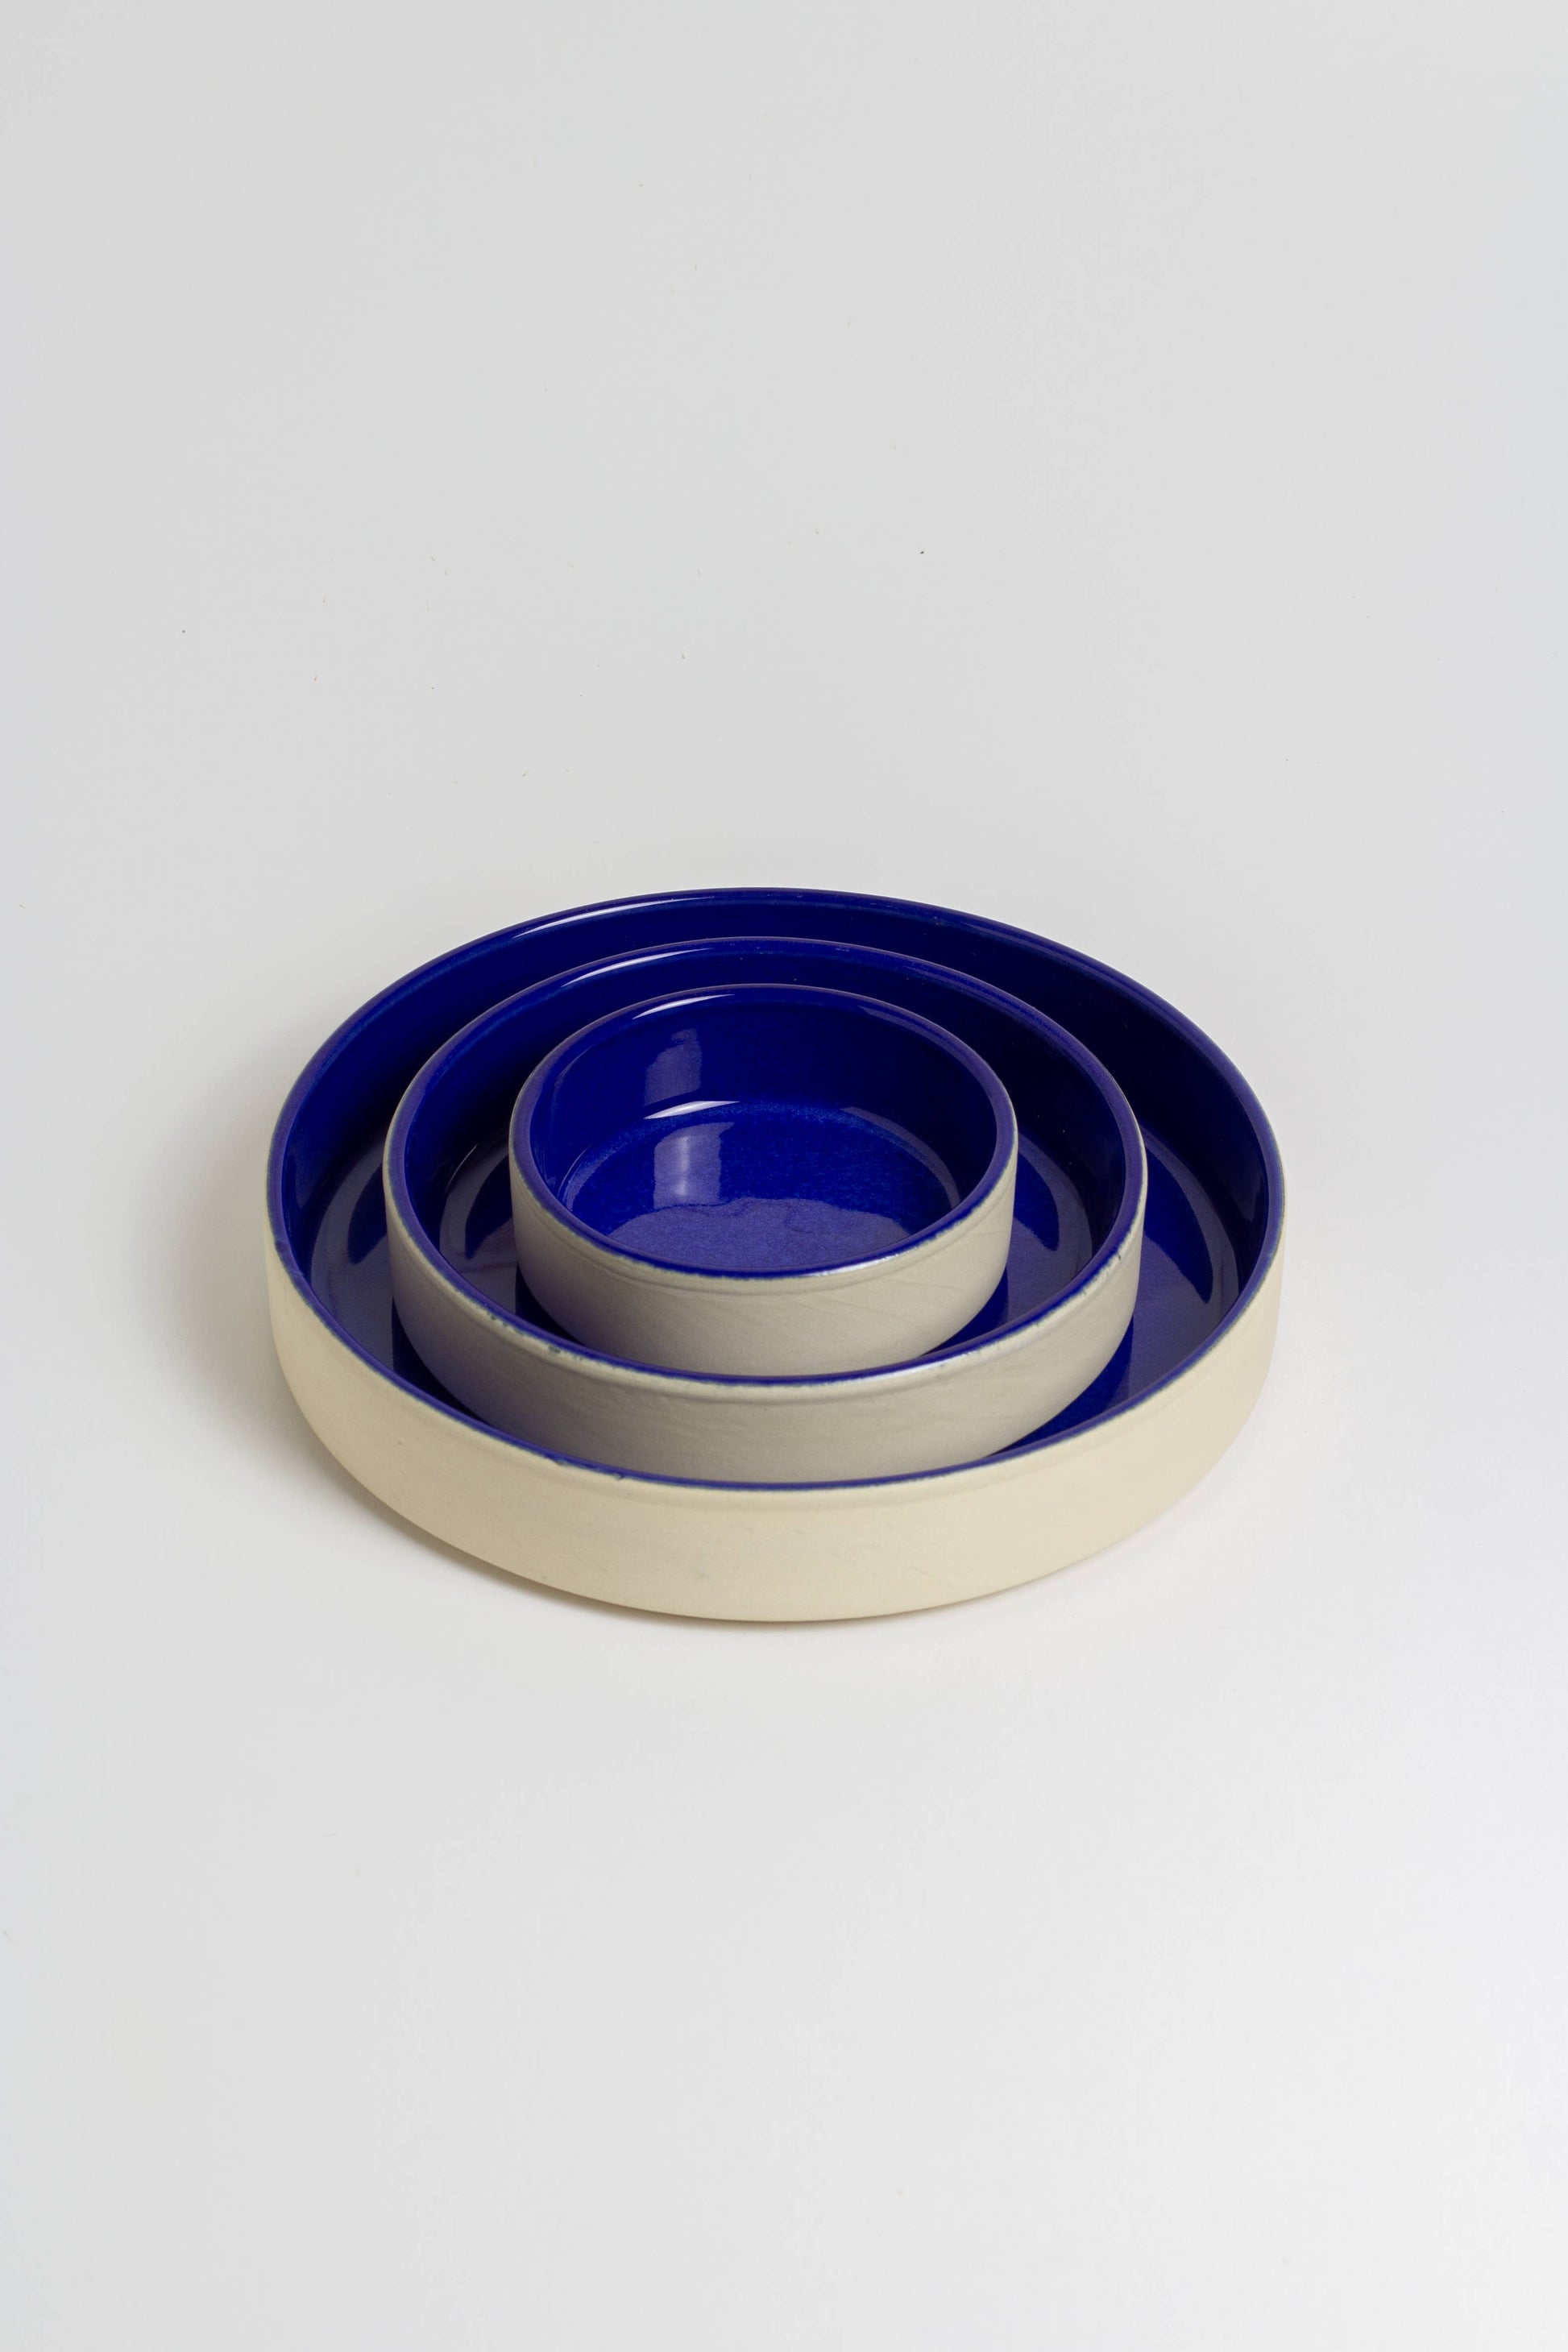 Serving Bowls Blue - Ceramics Handmade in Portugal